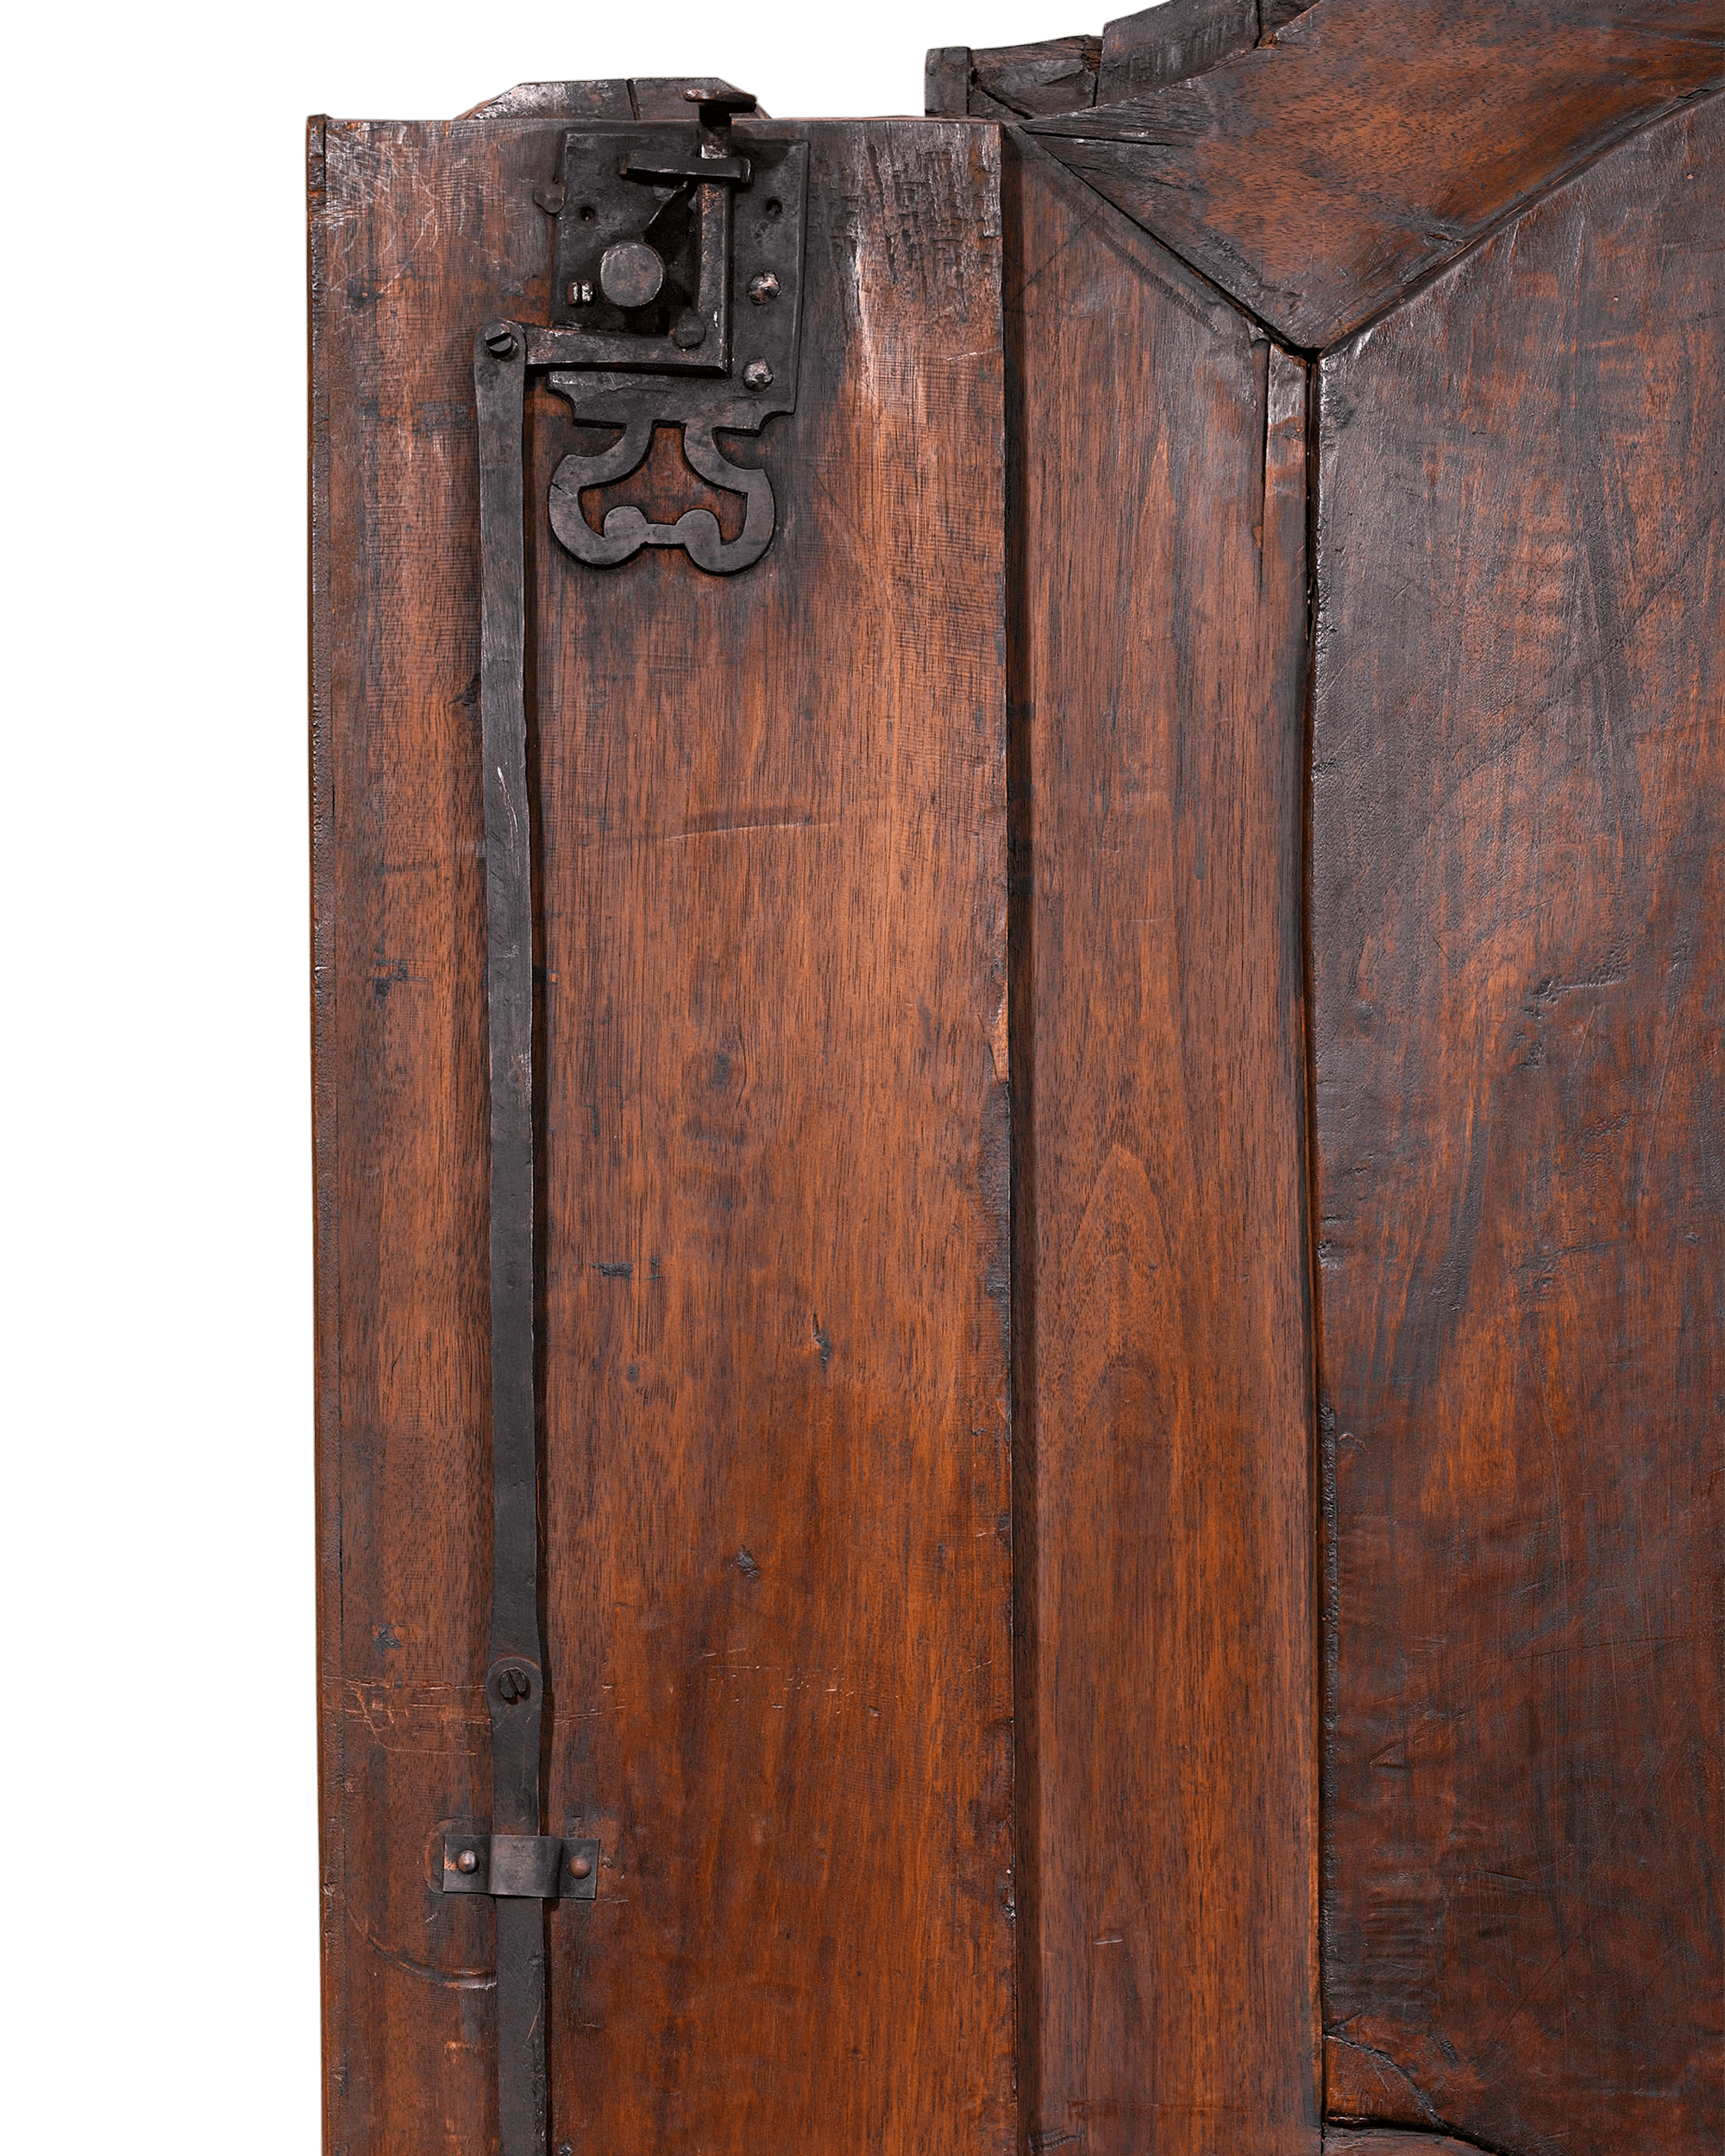 This armoire retains its original hardware